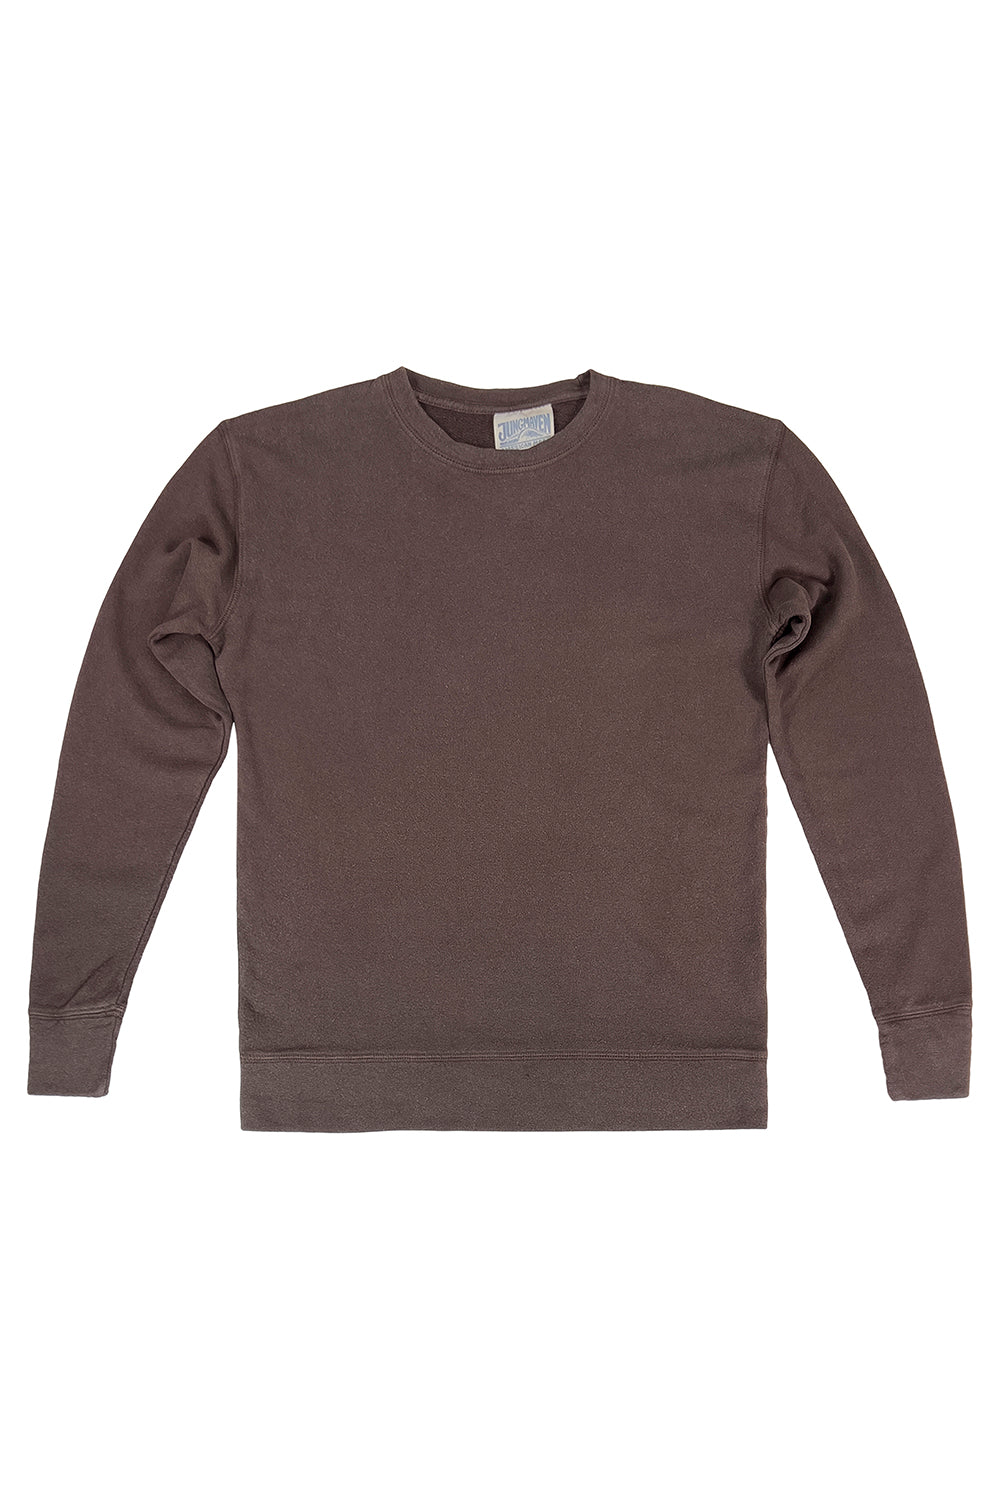 Tahoe Sweatshirt | Jungmaven Hemp Clothing & Accessories / Color: Coffee Bean